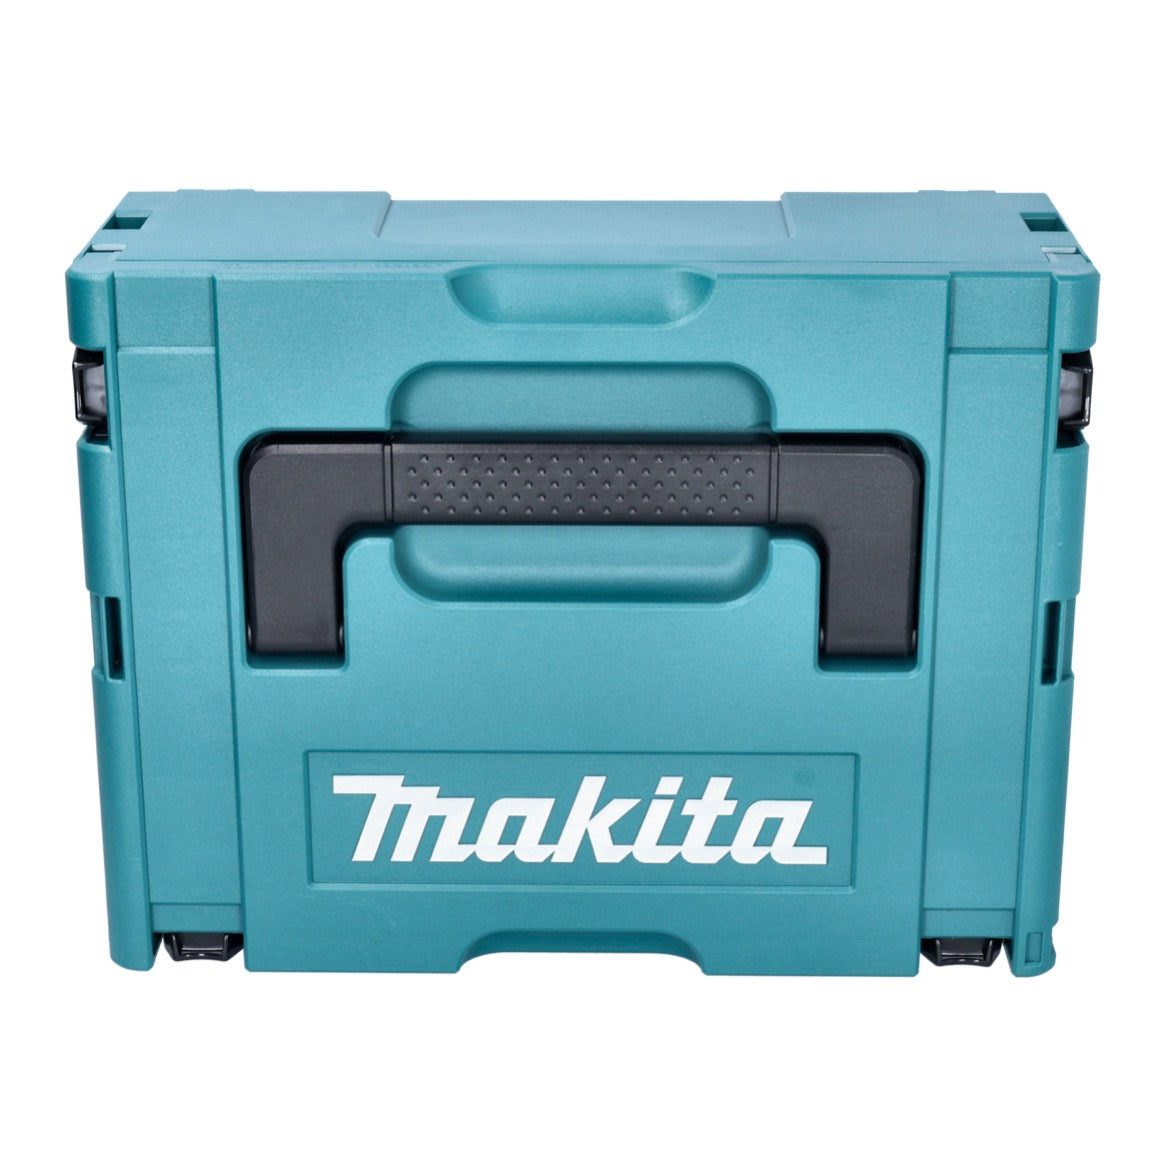 Makita DDF 489 M1J Akku Bohrschrauber 18 V 73 Nm Brushless + 1x Akku 4,0 Ah + Makpac - ohne Ladegerät